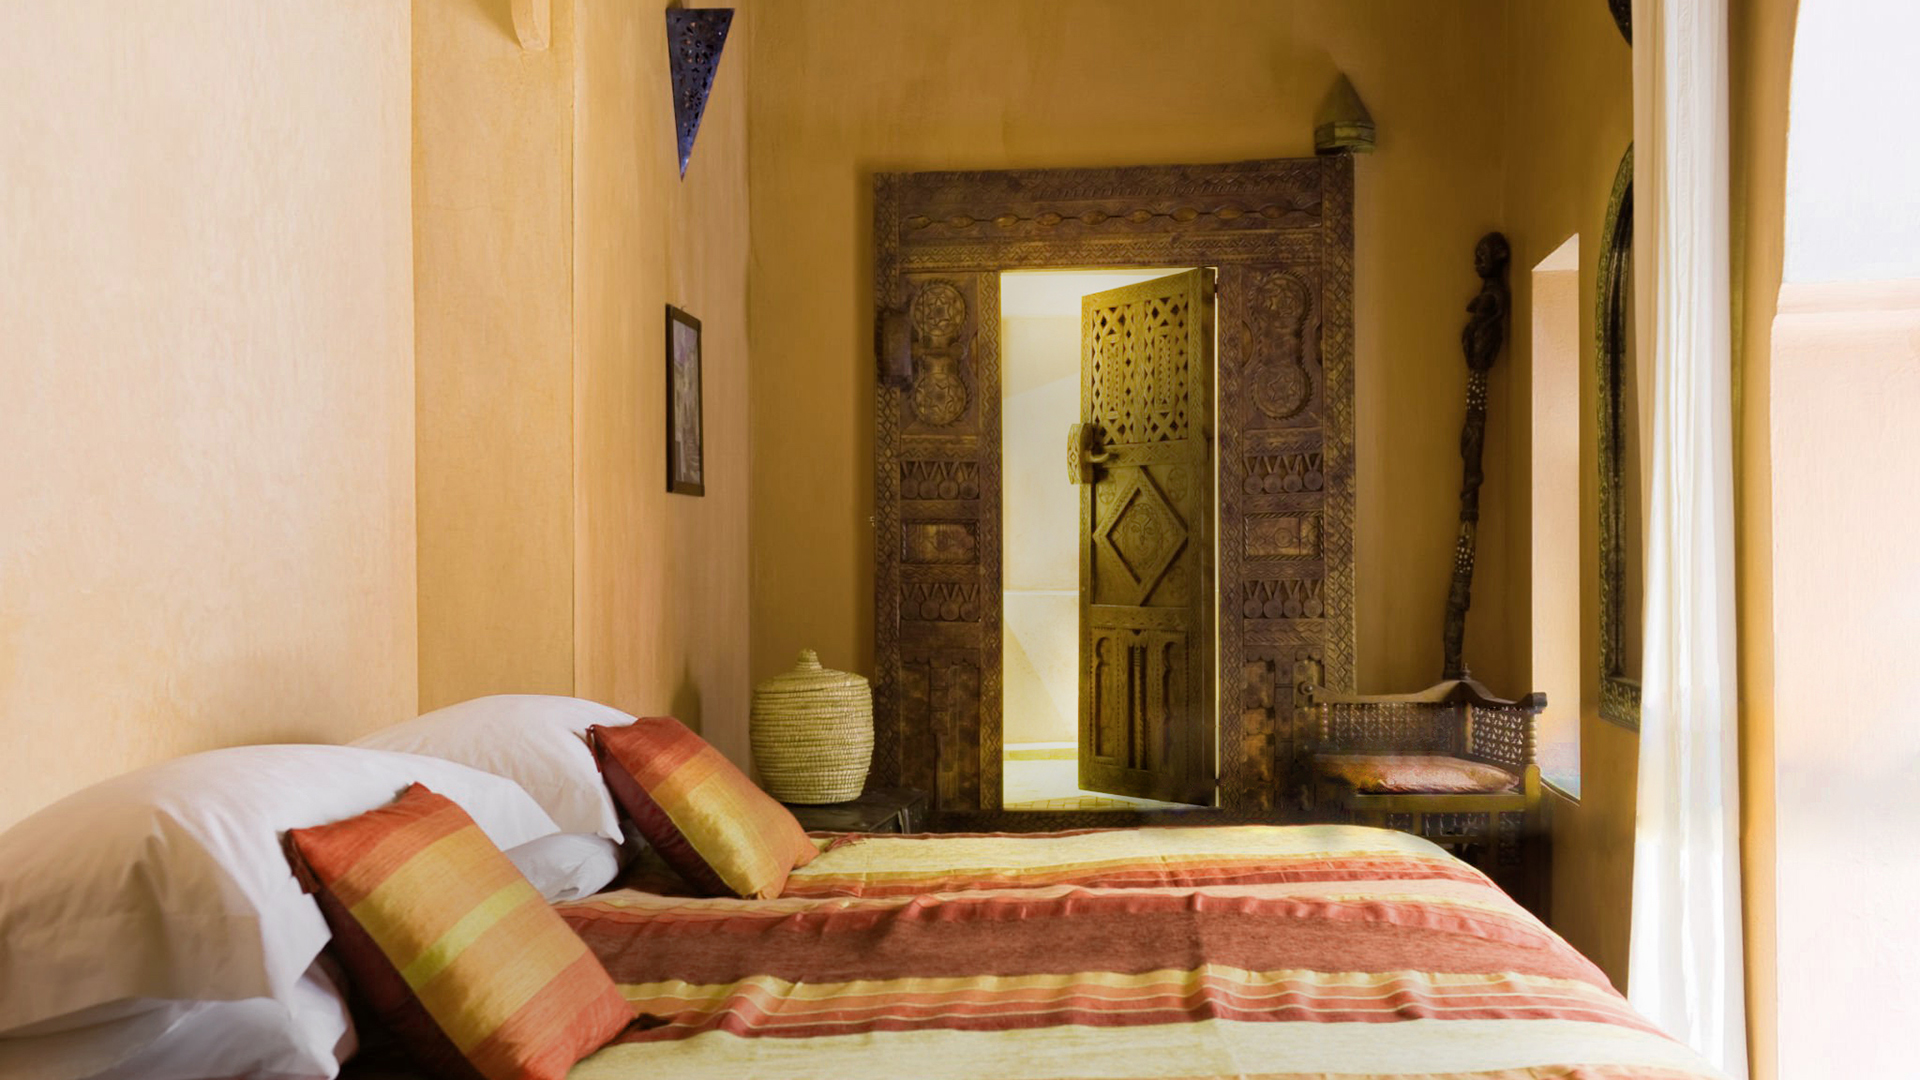 Dormitor de stil arab cu tadelakt pe pereți